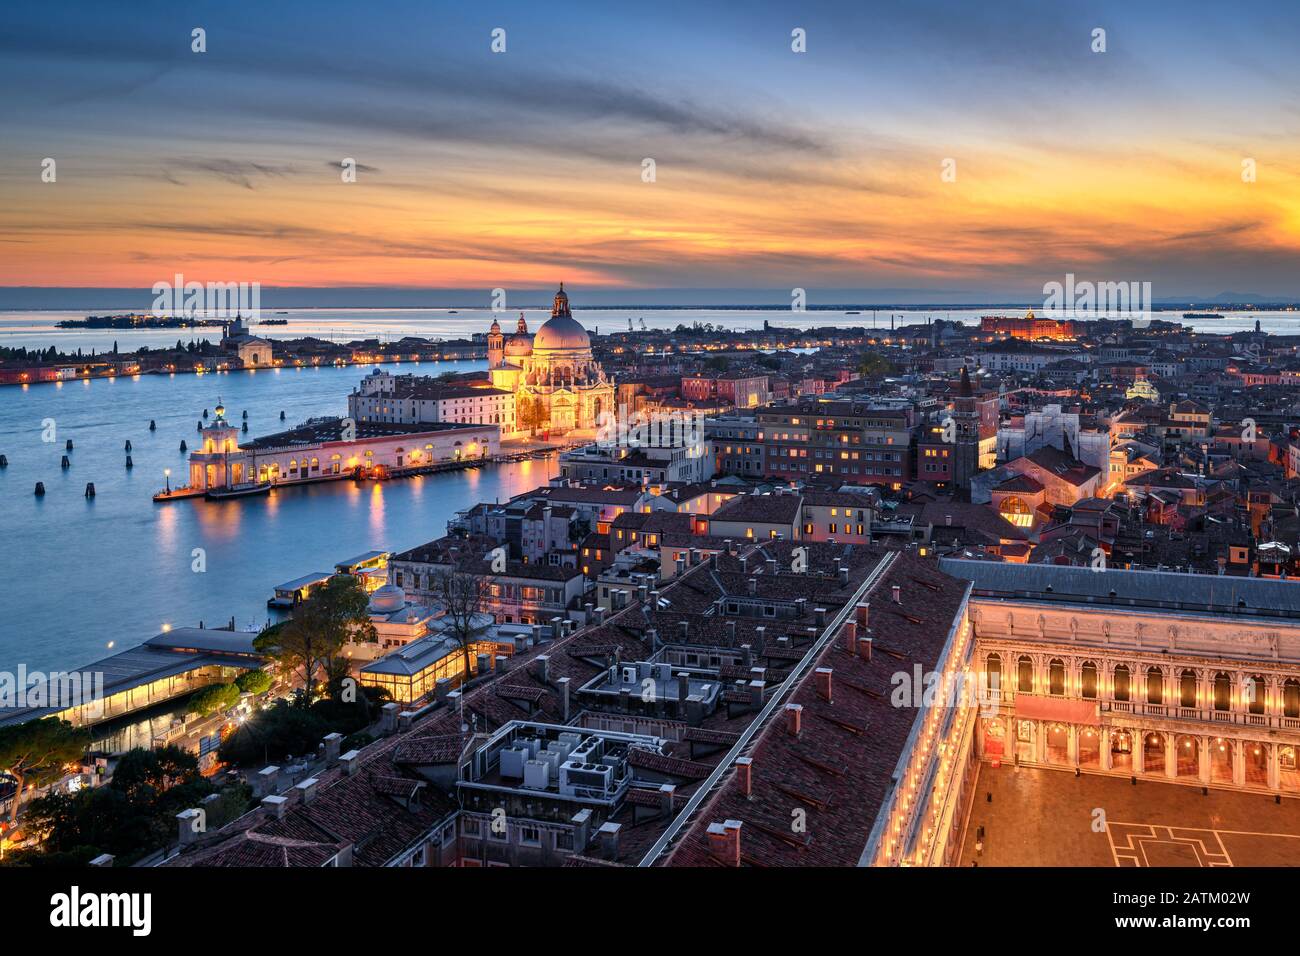 Sunset skyline of Venice with Basilica Santa Maria della Salute and San Marco square Stock Photo